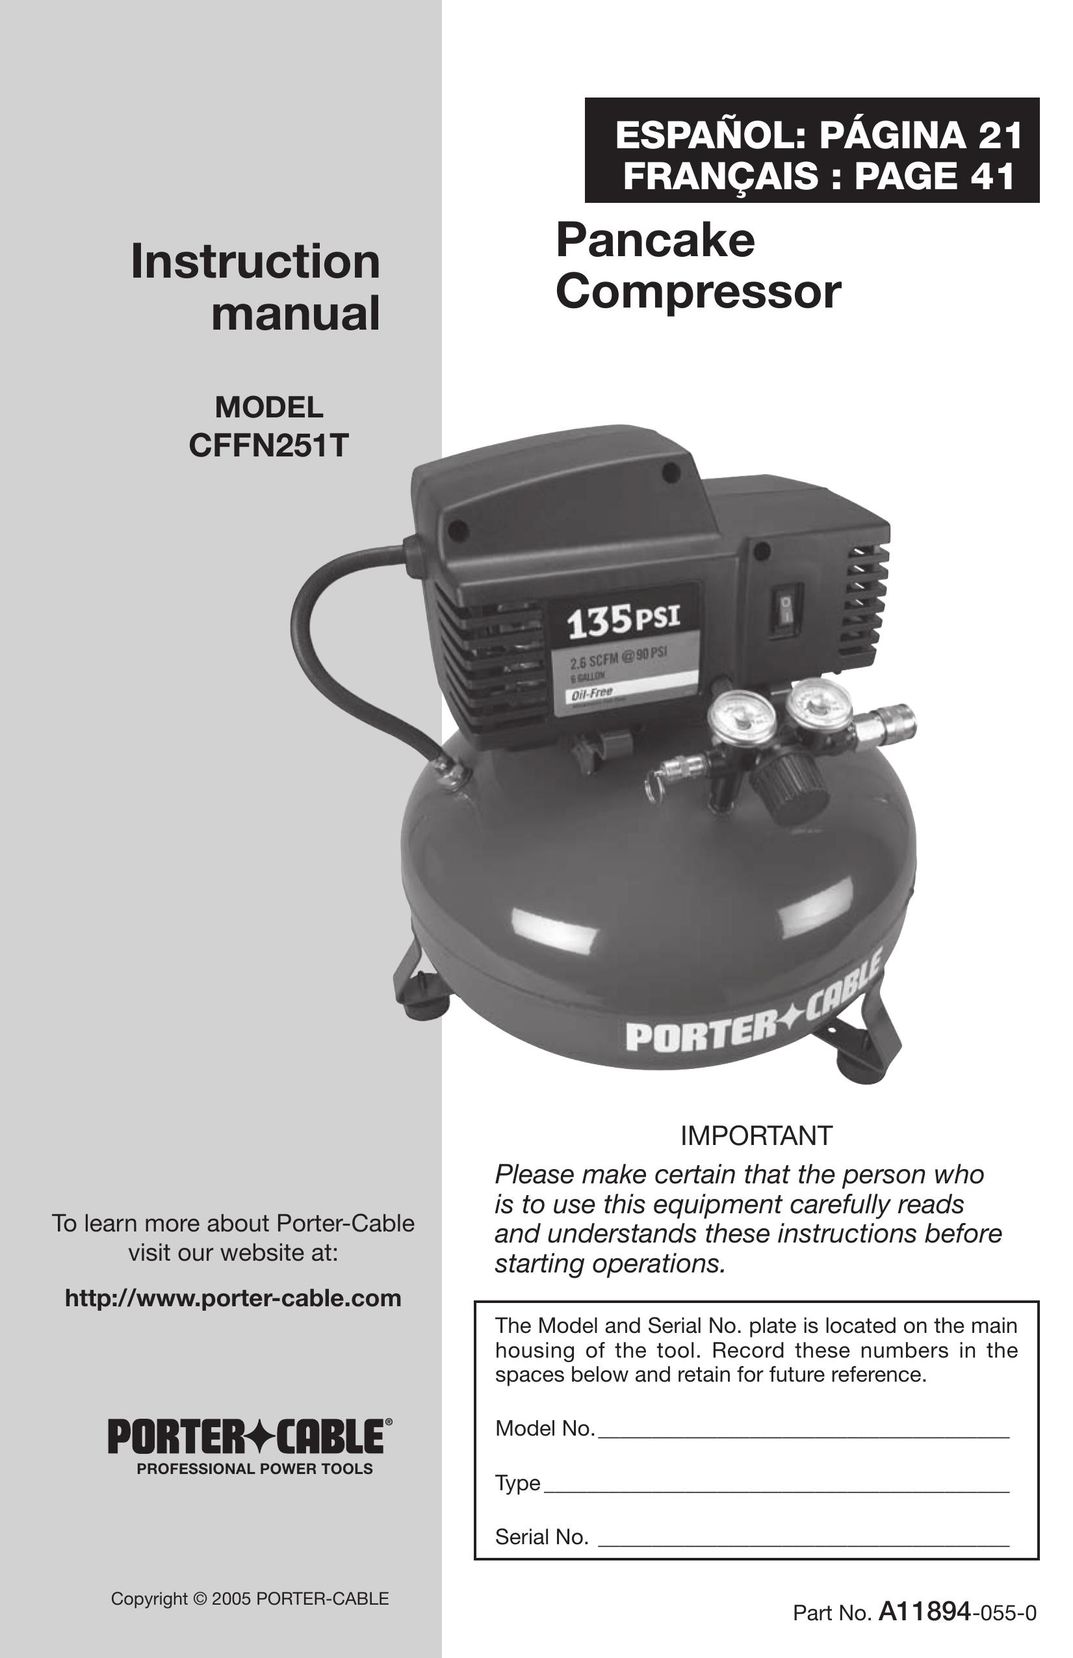 Porter-Cable CFFN251T Air Compressor User Manual